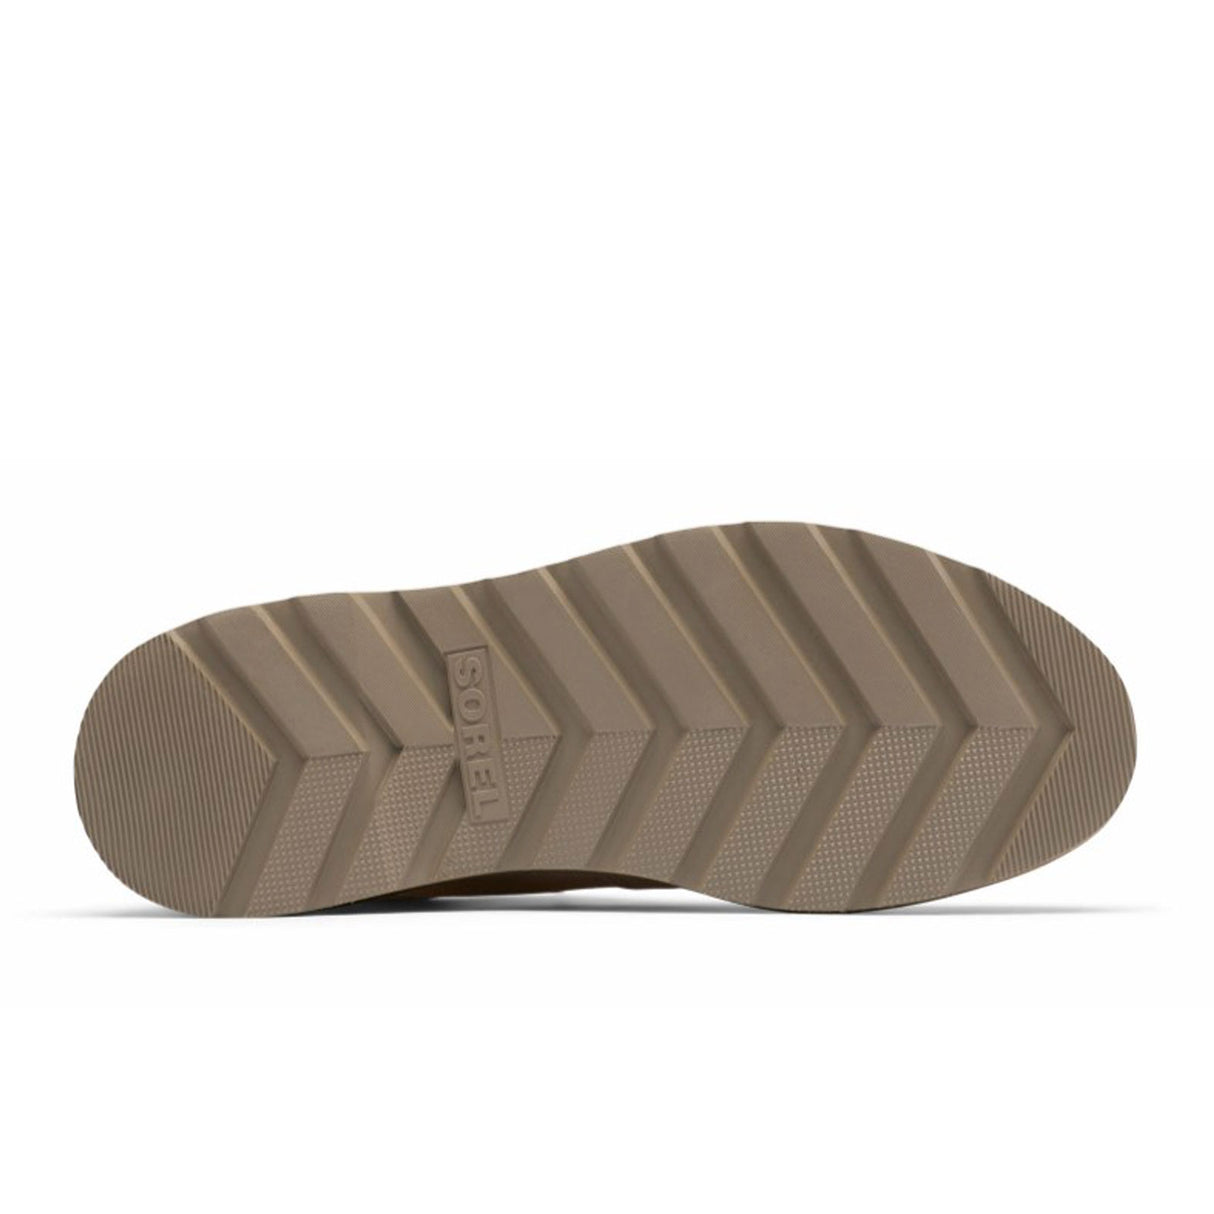 Sorel Hi-Line Hiker (Women) - Ceramic/Major Boots - Fashion - Chelsea - The Heel Shoe Fitters